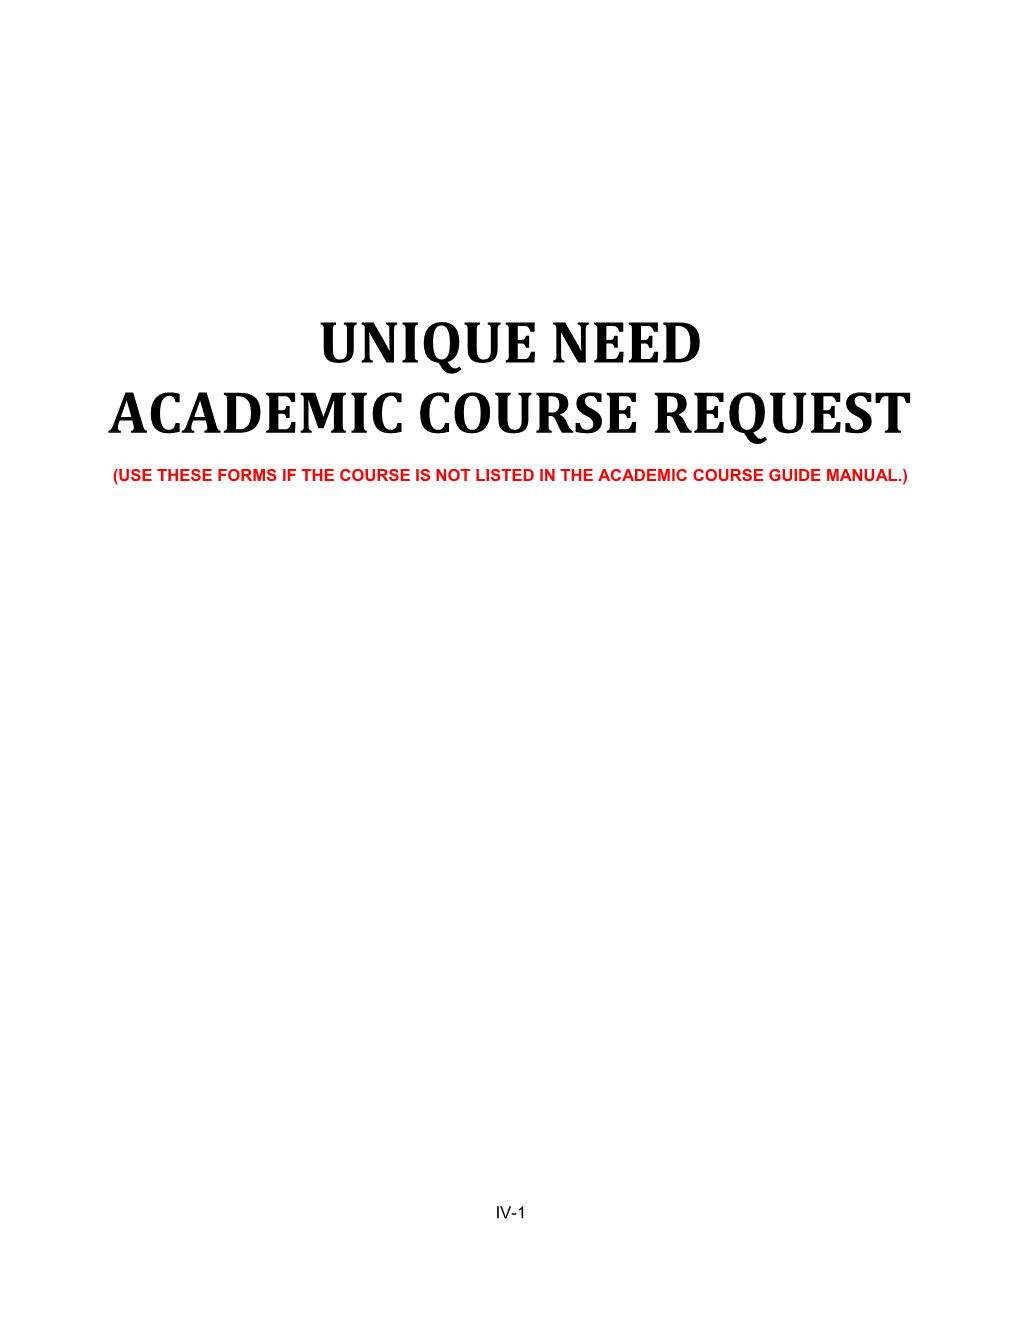 Academic Course Request